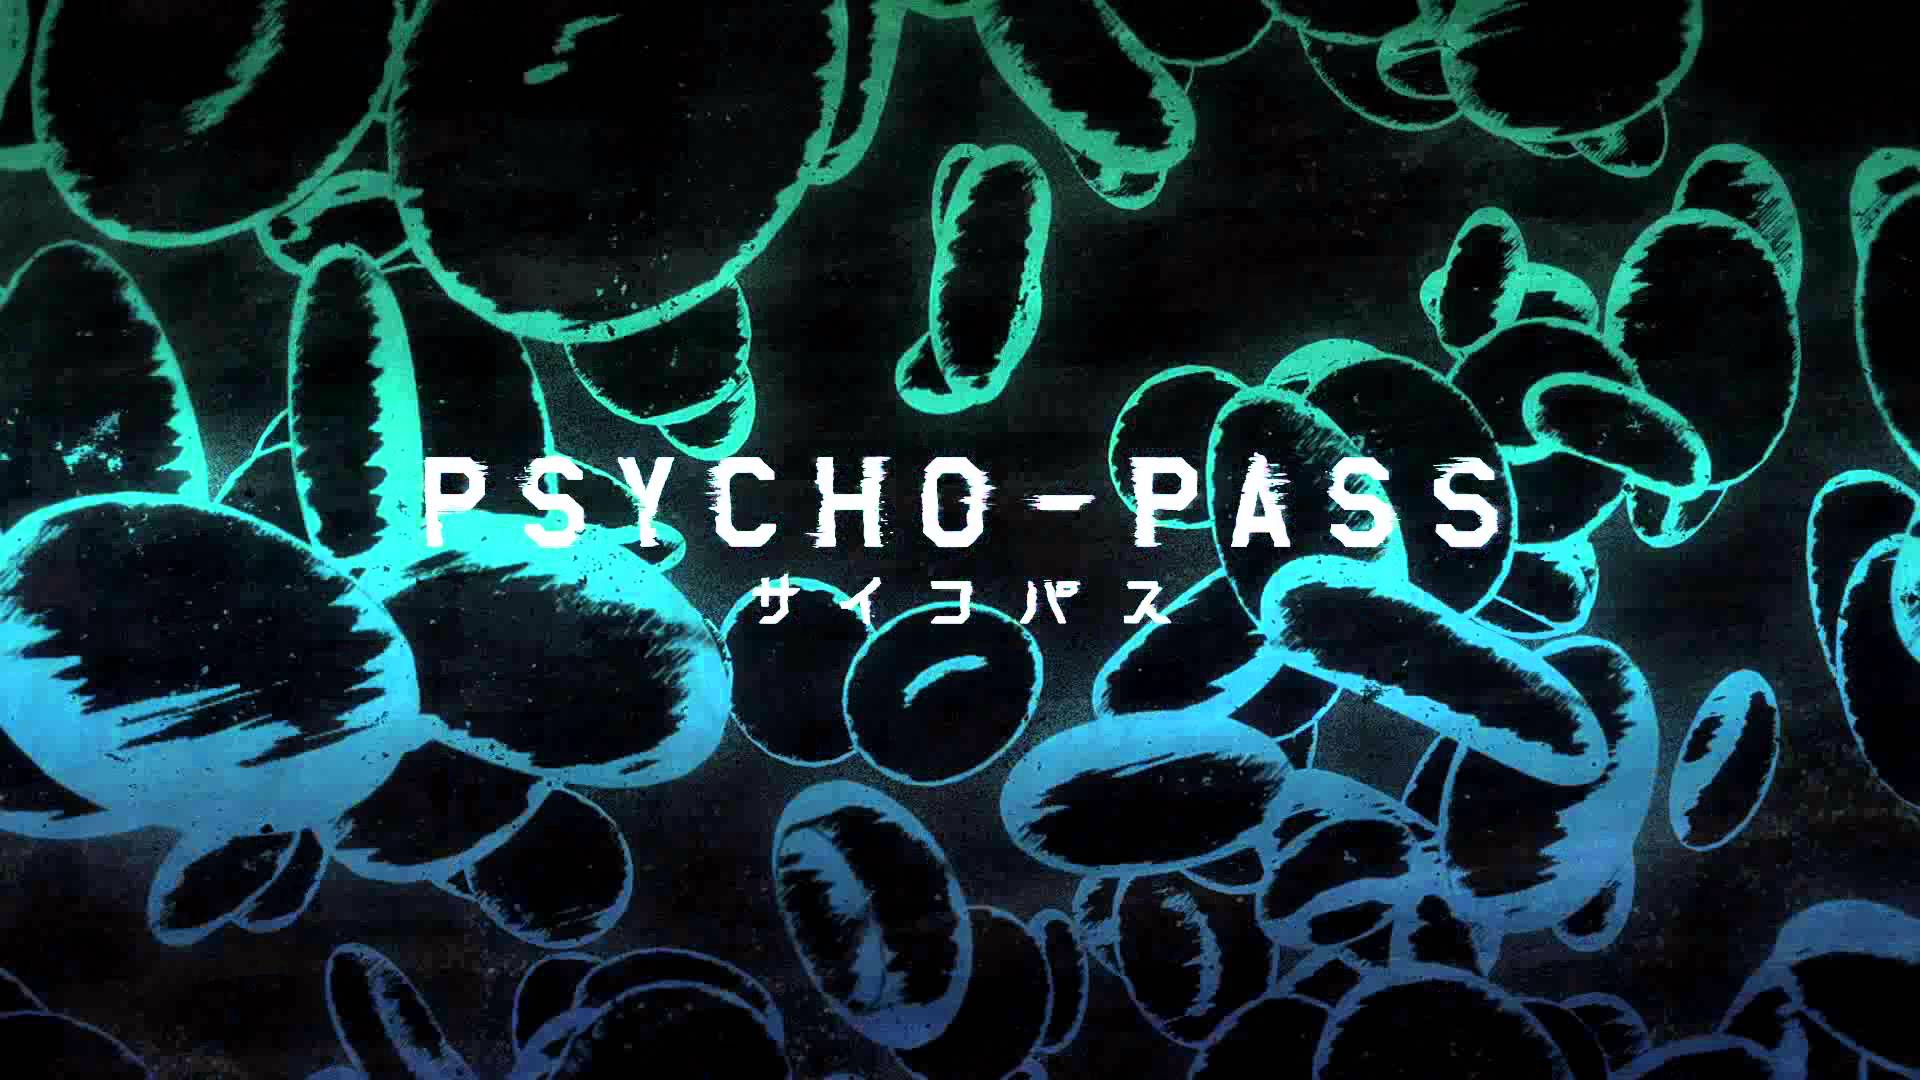 Free Download Psycho Pass Wallpapersscreensavers Part Vi Anime Pinterest 19x1080 For Your Desktop Mobile Tablet Explore 49 Psycho Pass Wallpaper Psycho Wallpaper Psycho Pass Wallpaper Hd